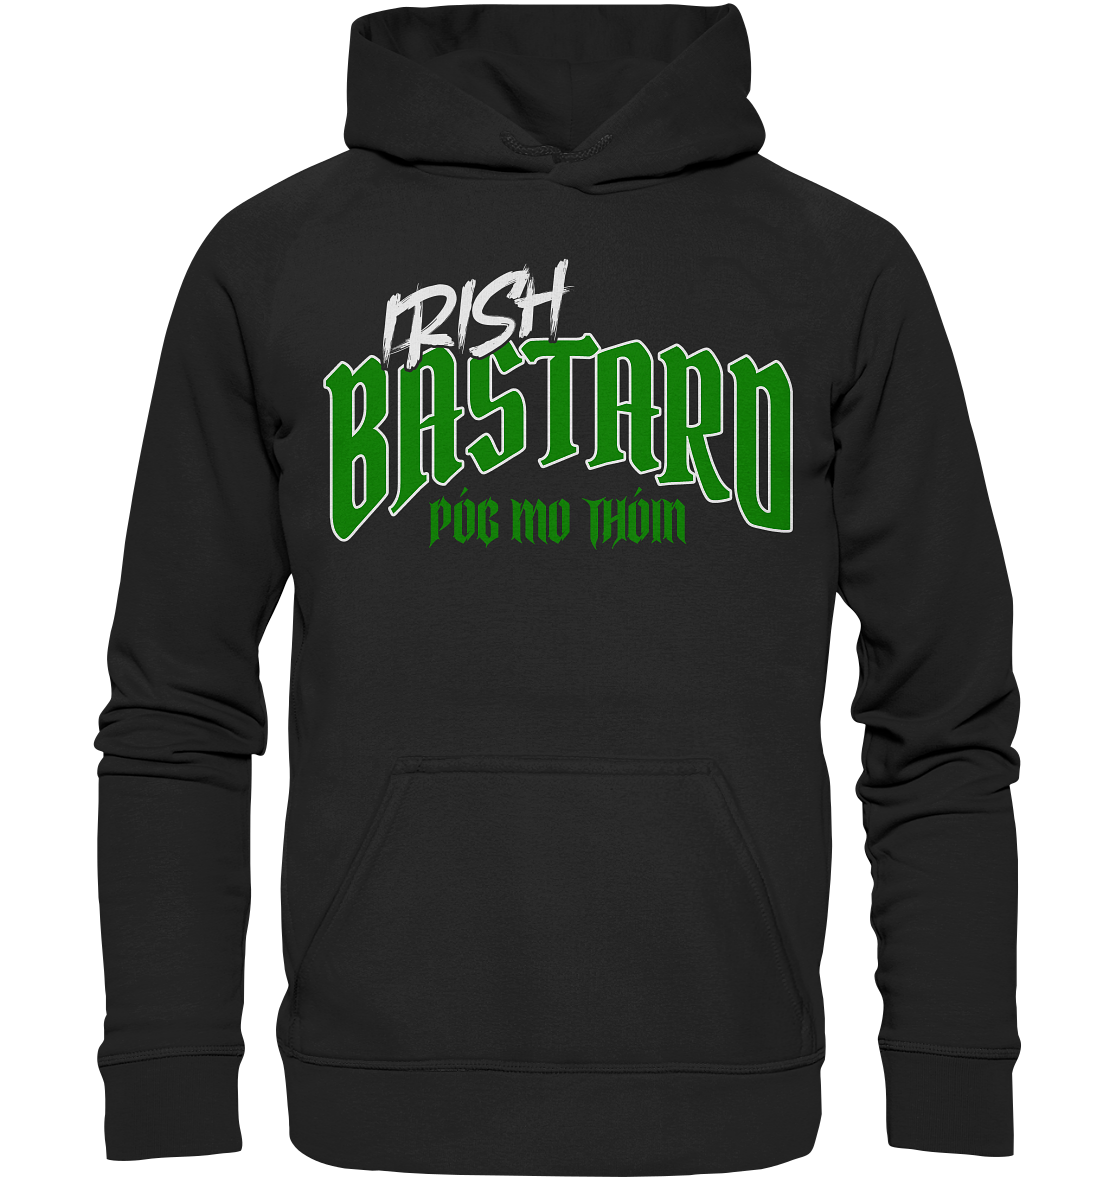 Póg Mo Thóin Streetwear "Irish Bastard" - Basic Unisex Hoodie